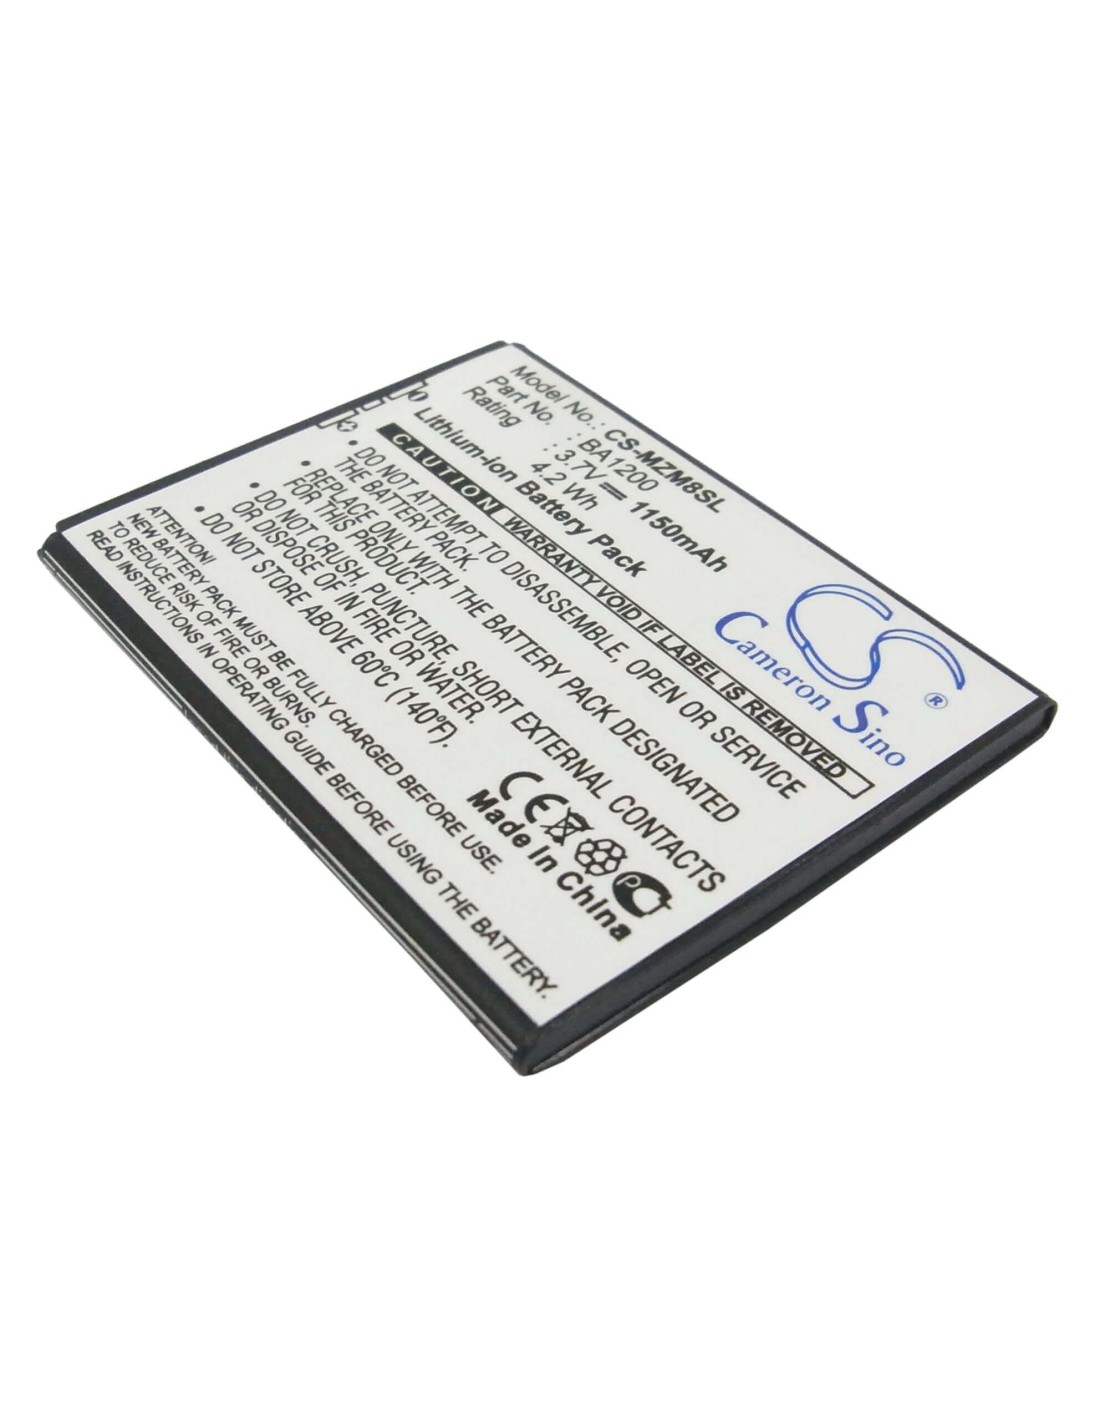 Battery for MeiZu M8, M8 8GB, M8 16GB 3.7V, 1150mAh - 4.26Wh